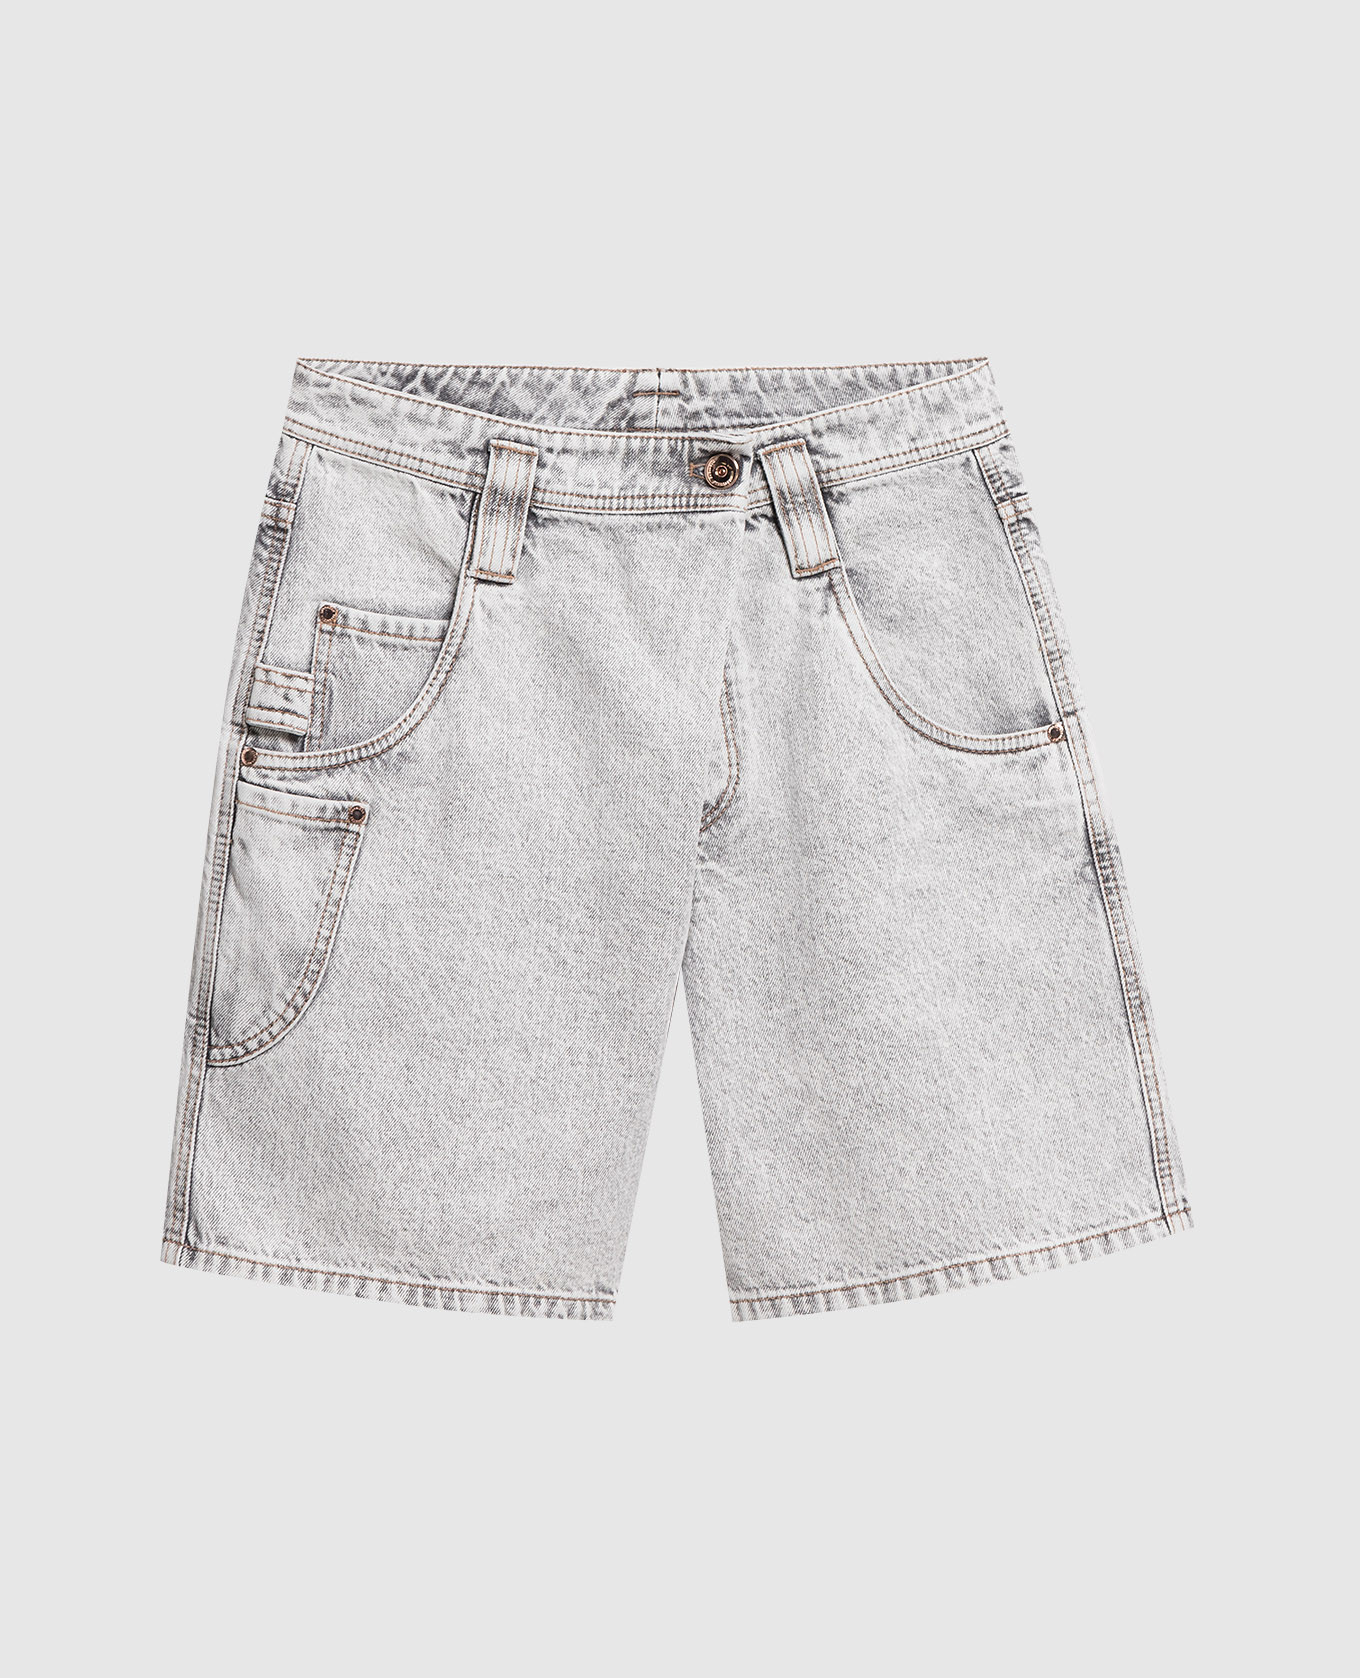 Gray denim shorts with monil chain